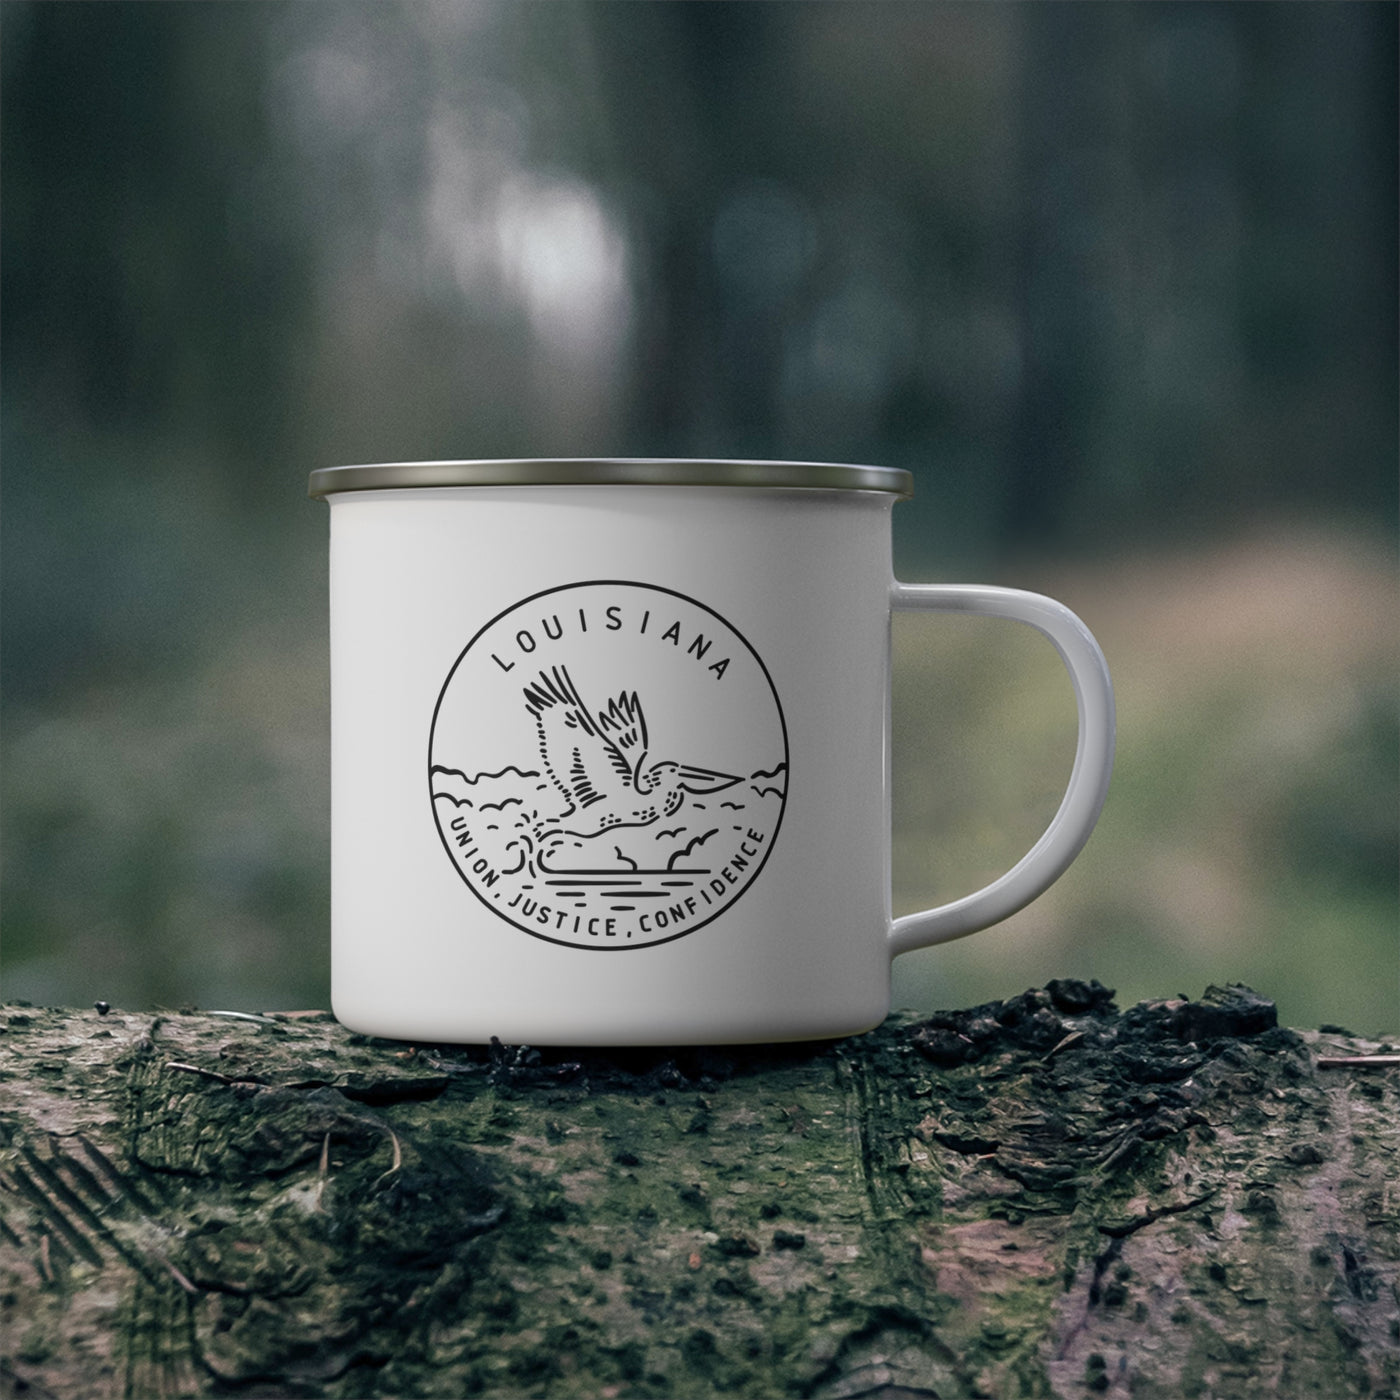 Louisiana State Motto Enamel Camping Mug